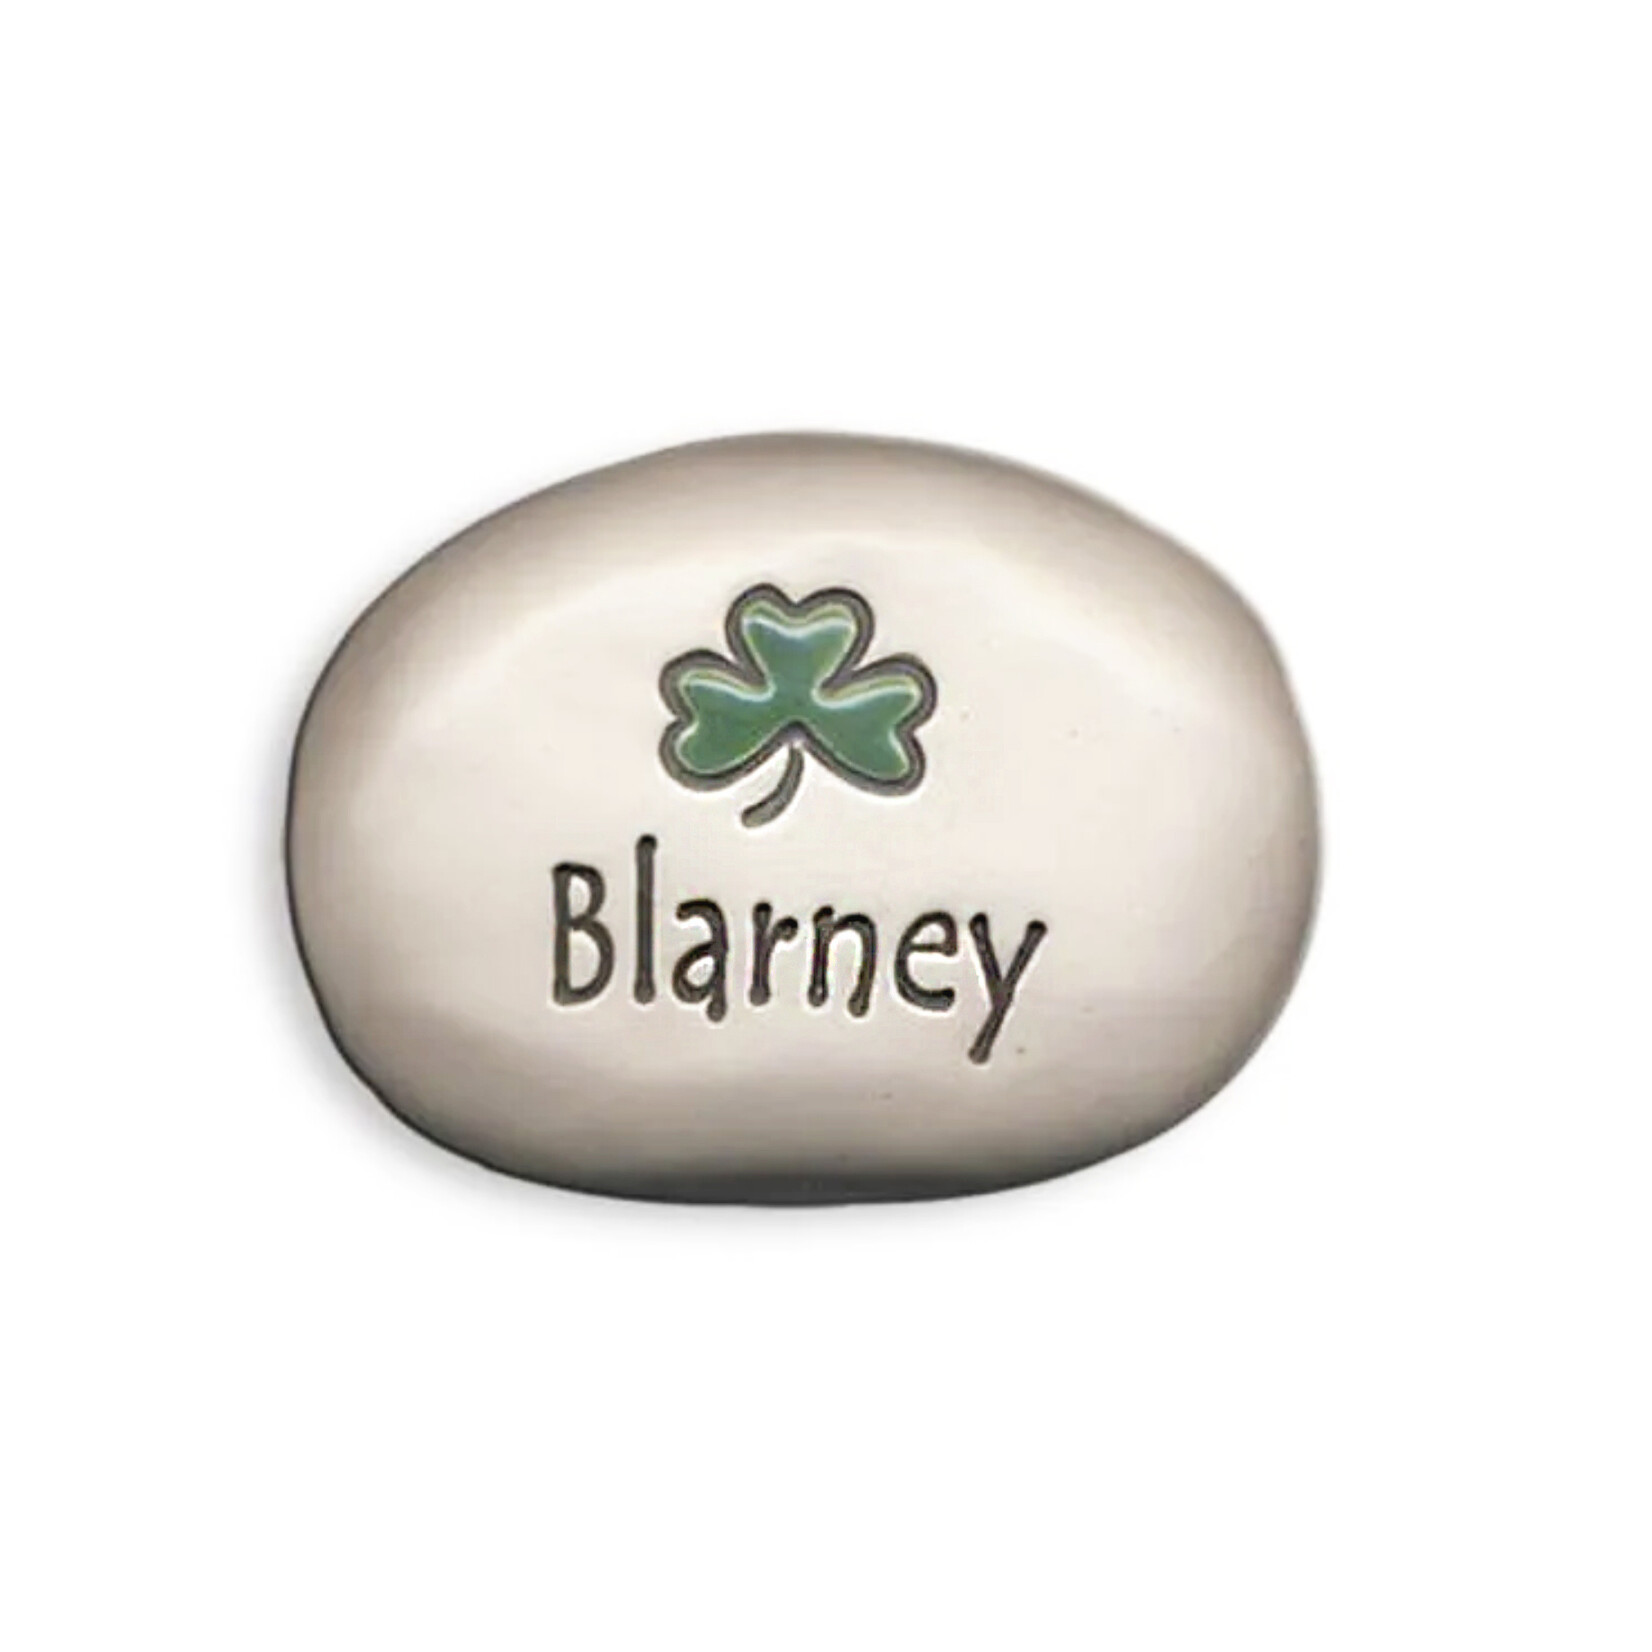 August Ceramics "Blarney" Large Imprinted Garden Rock